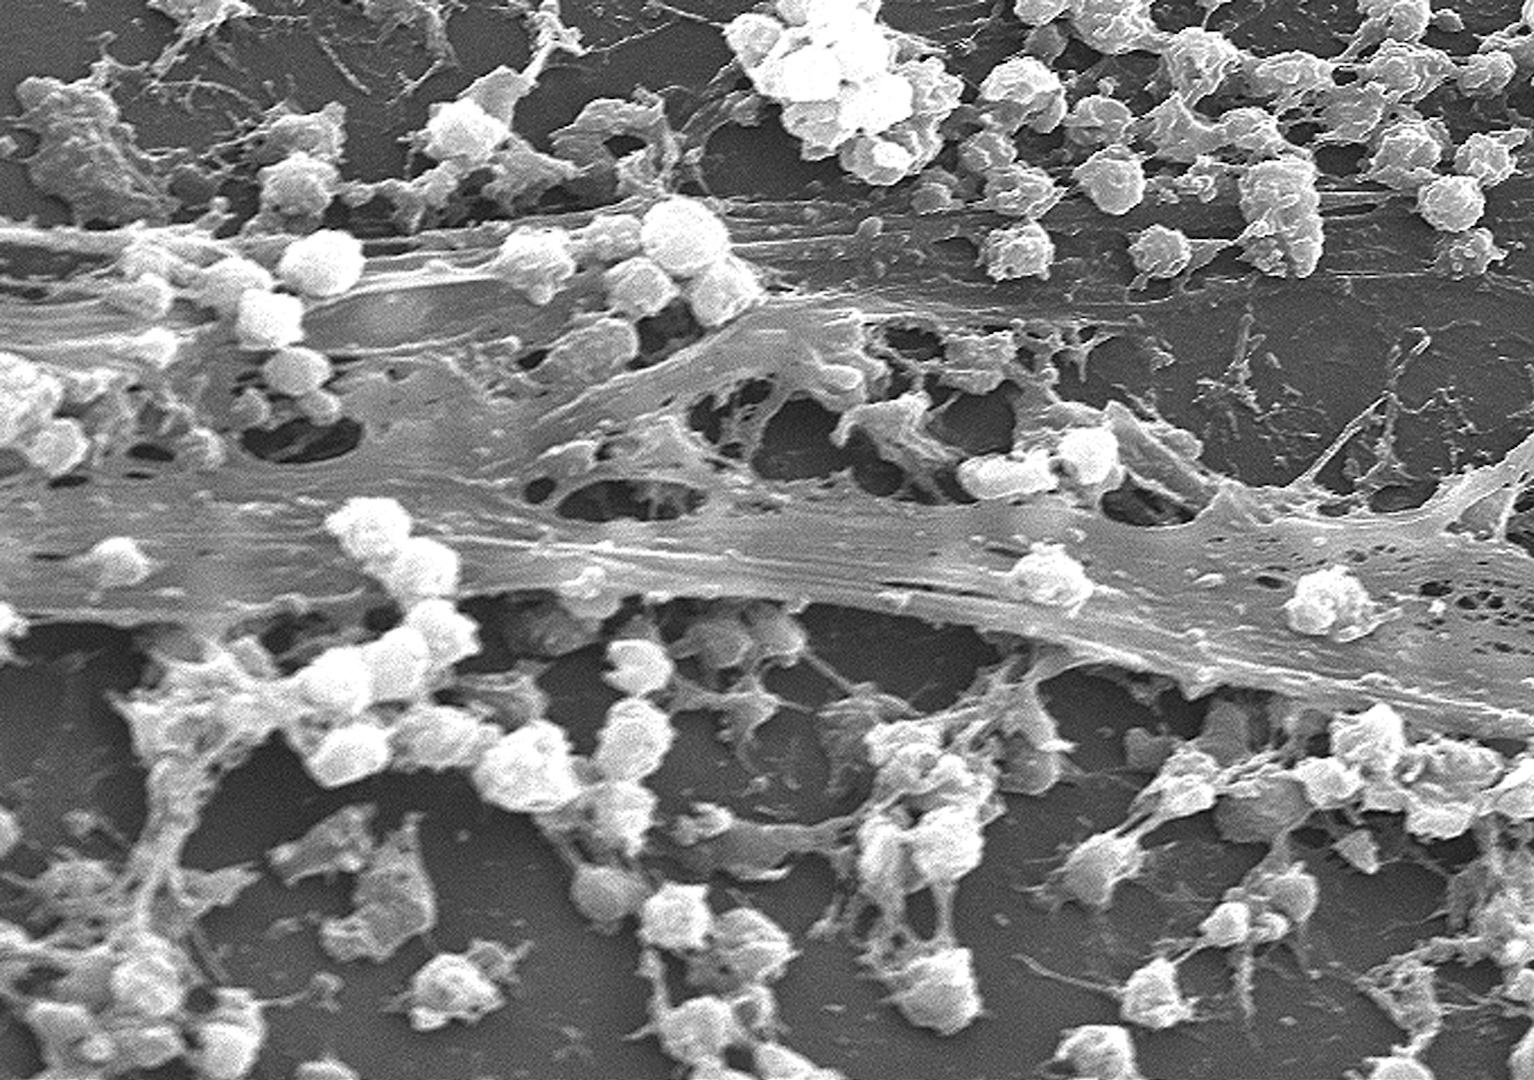 Staphylococcus aureus bacterial biofilm on an indwelling catheter.